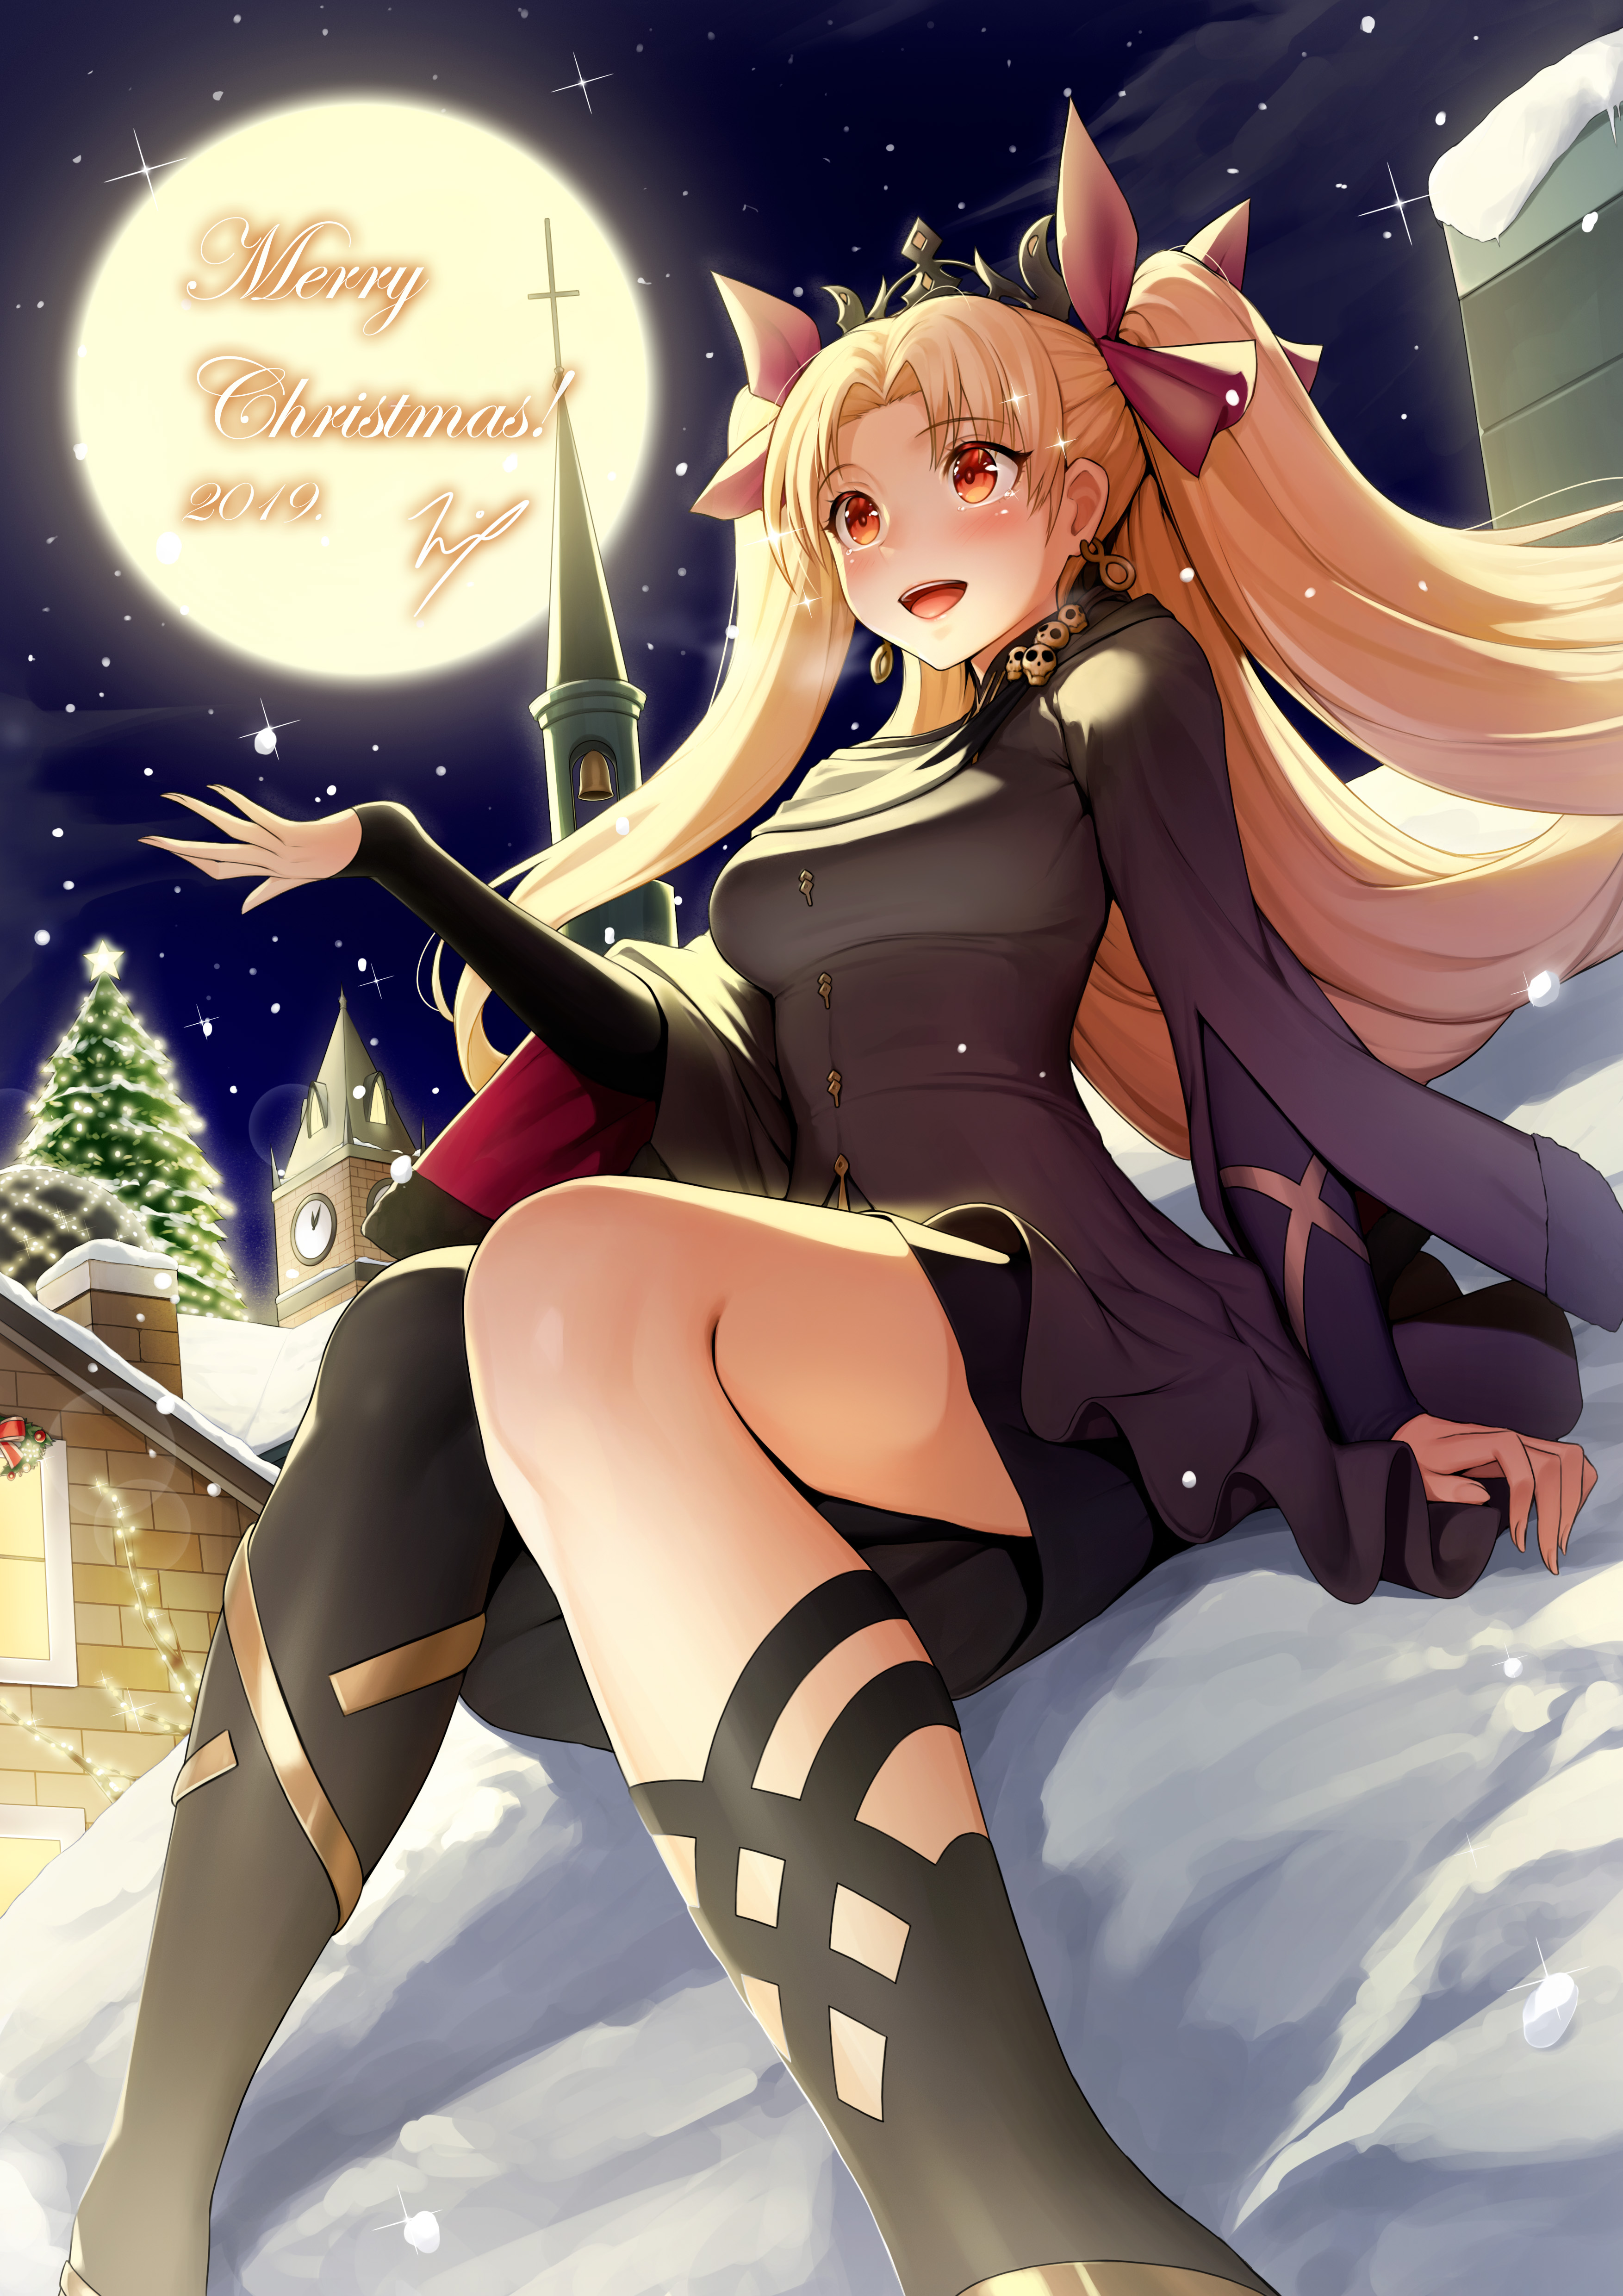 Anime 3507x4961 anime anime girls Fate series Fate/Grand Order Ereshkigal (Fate/Grand Order) twintails long hair blonde artwork digital art fan art Christmas Moon snow Christmas tree